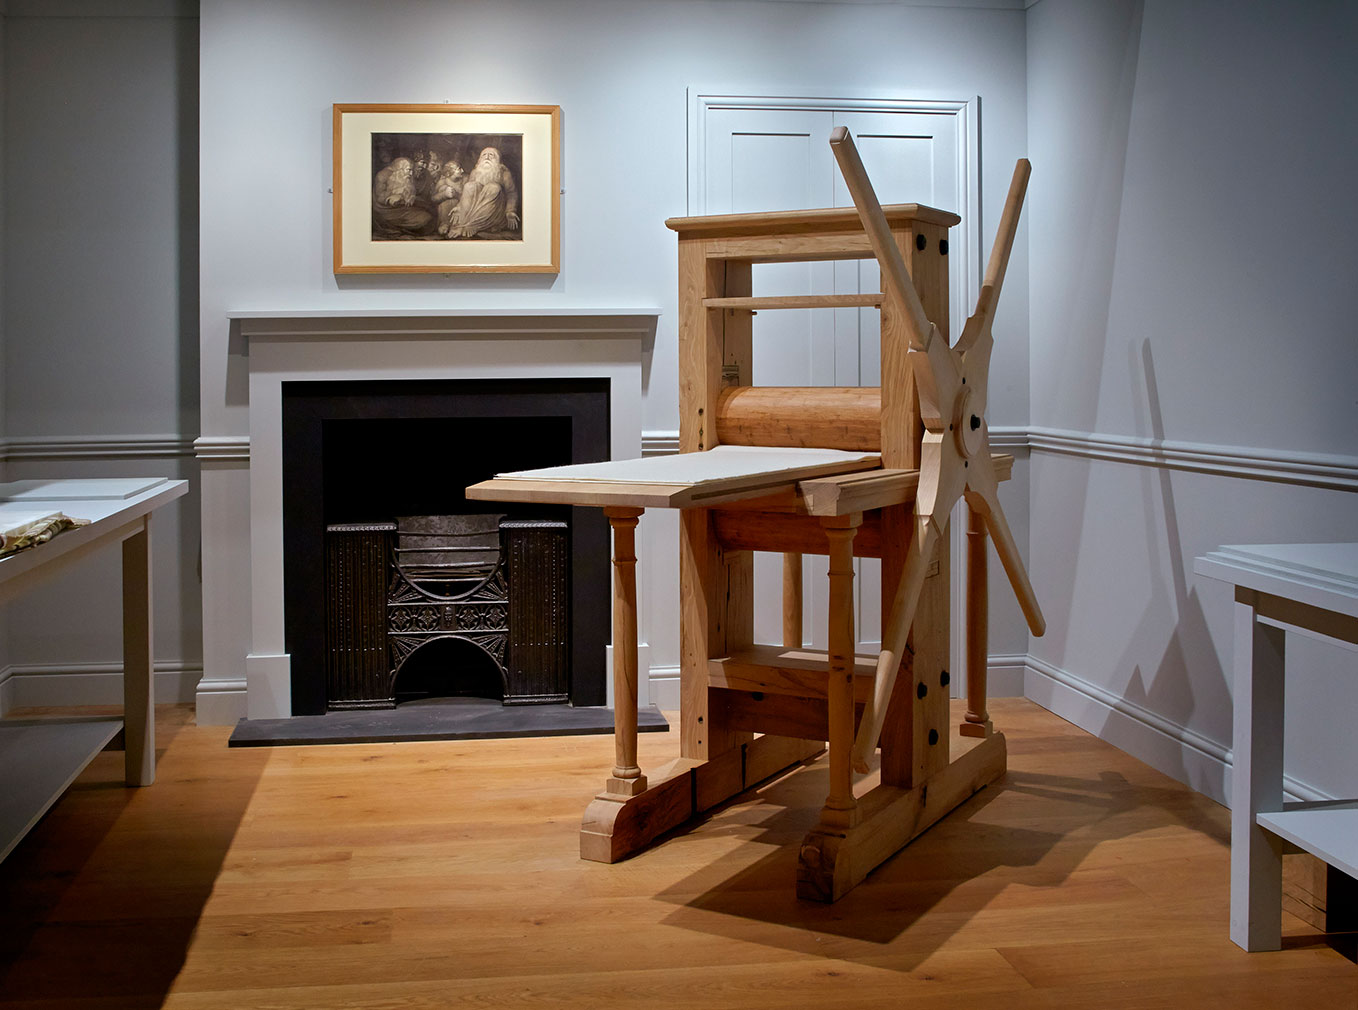 William Blake's studio at the Ashmolean in Oxford